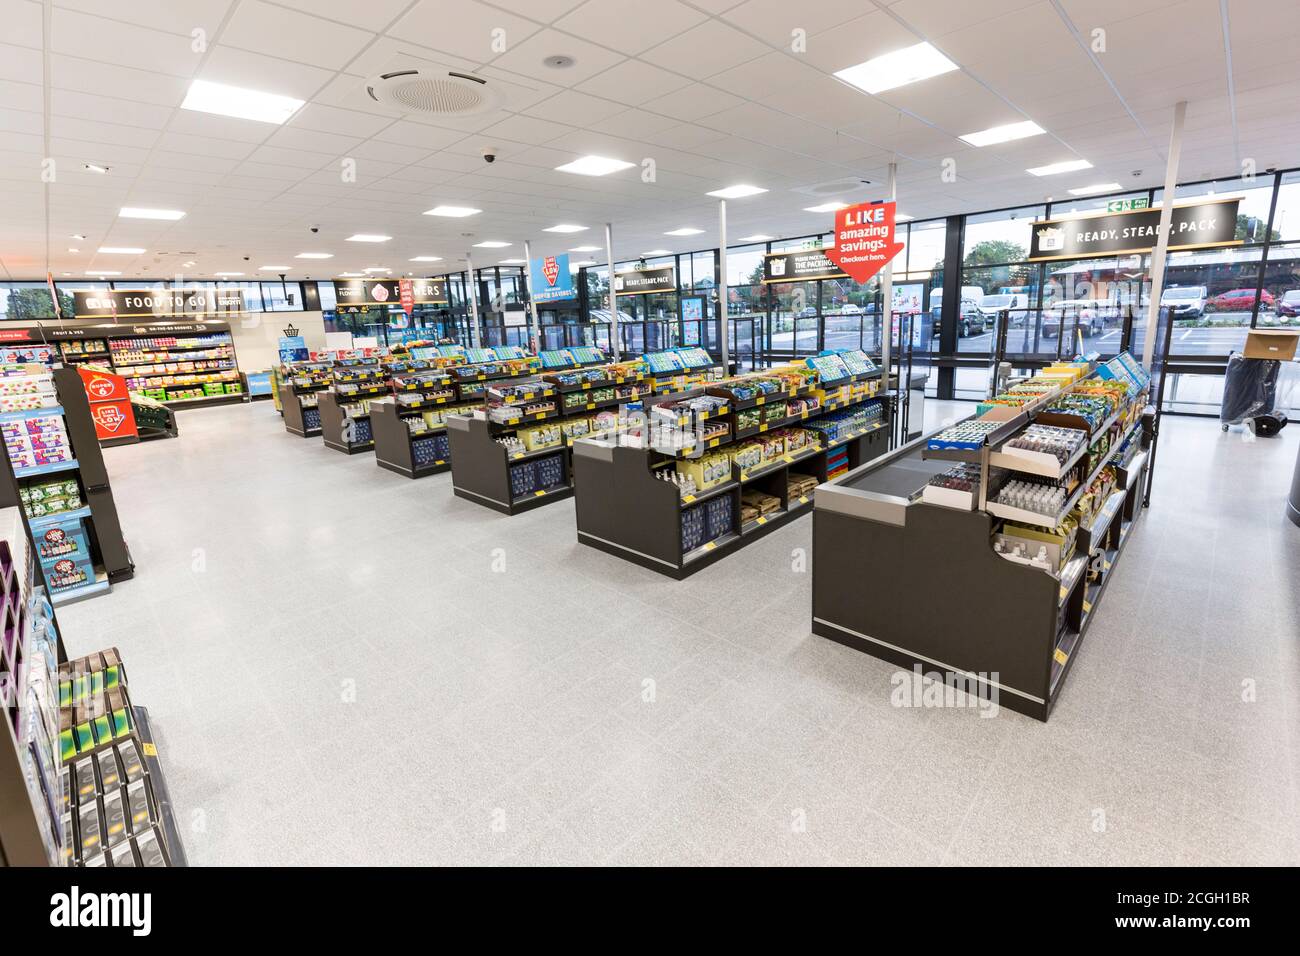 Aldi Supermarket interior Stock Photo